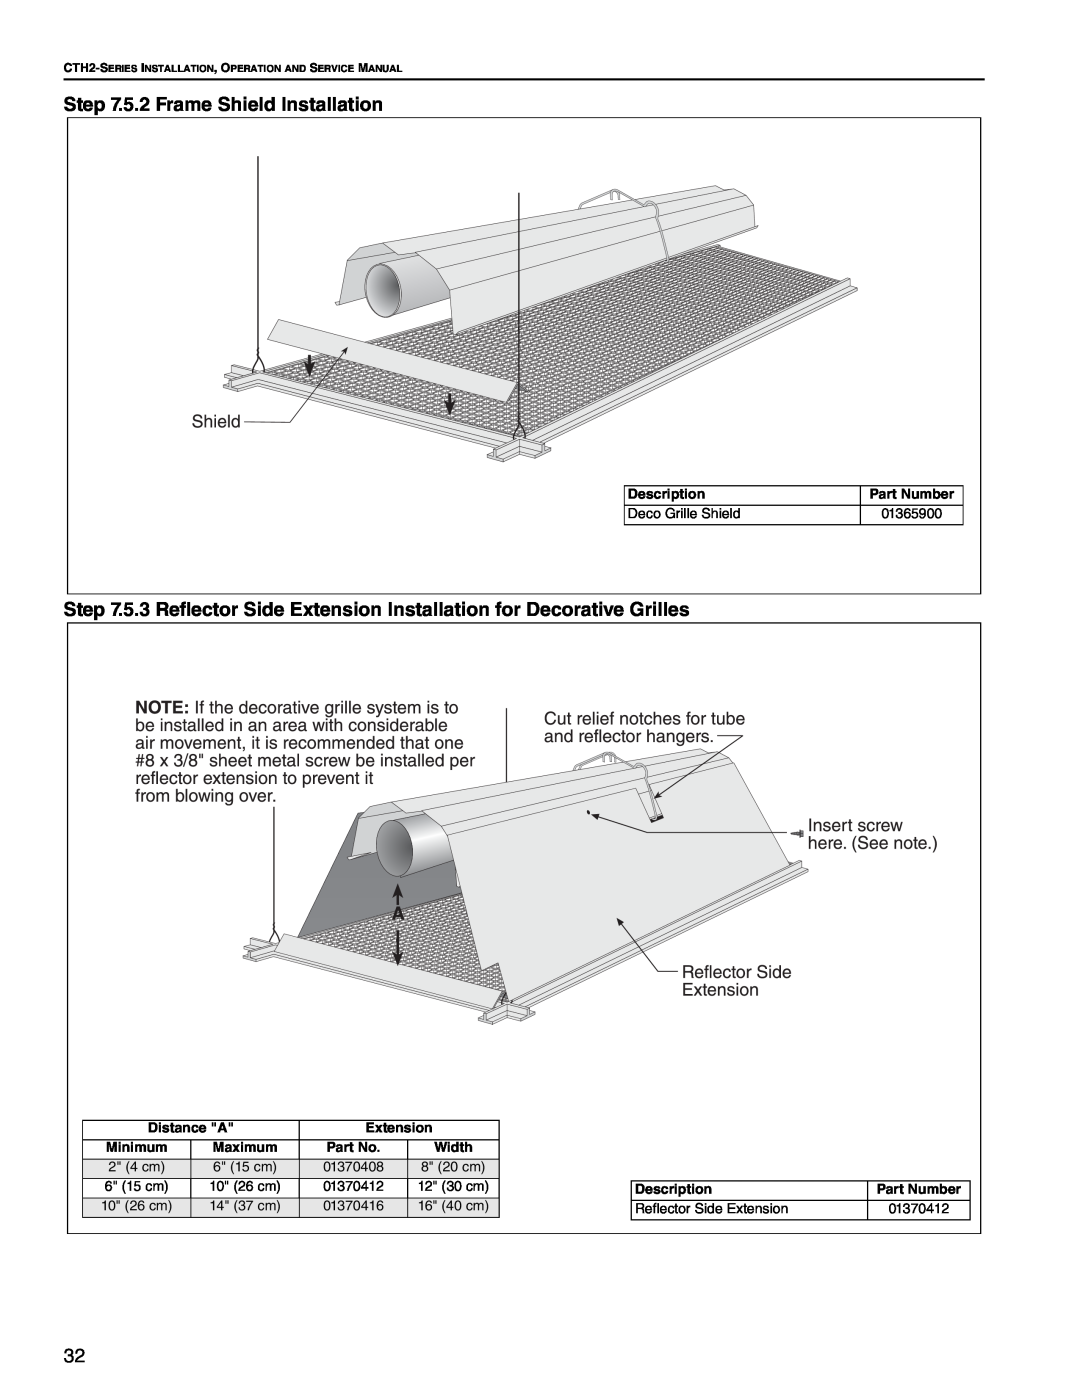 Roberts Gorden CTH2-100 5.2 Frame Shield Installation, Description, Distance A, Extension, Part Number, Minimum, Maximum 